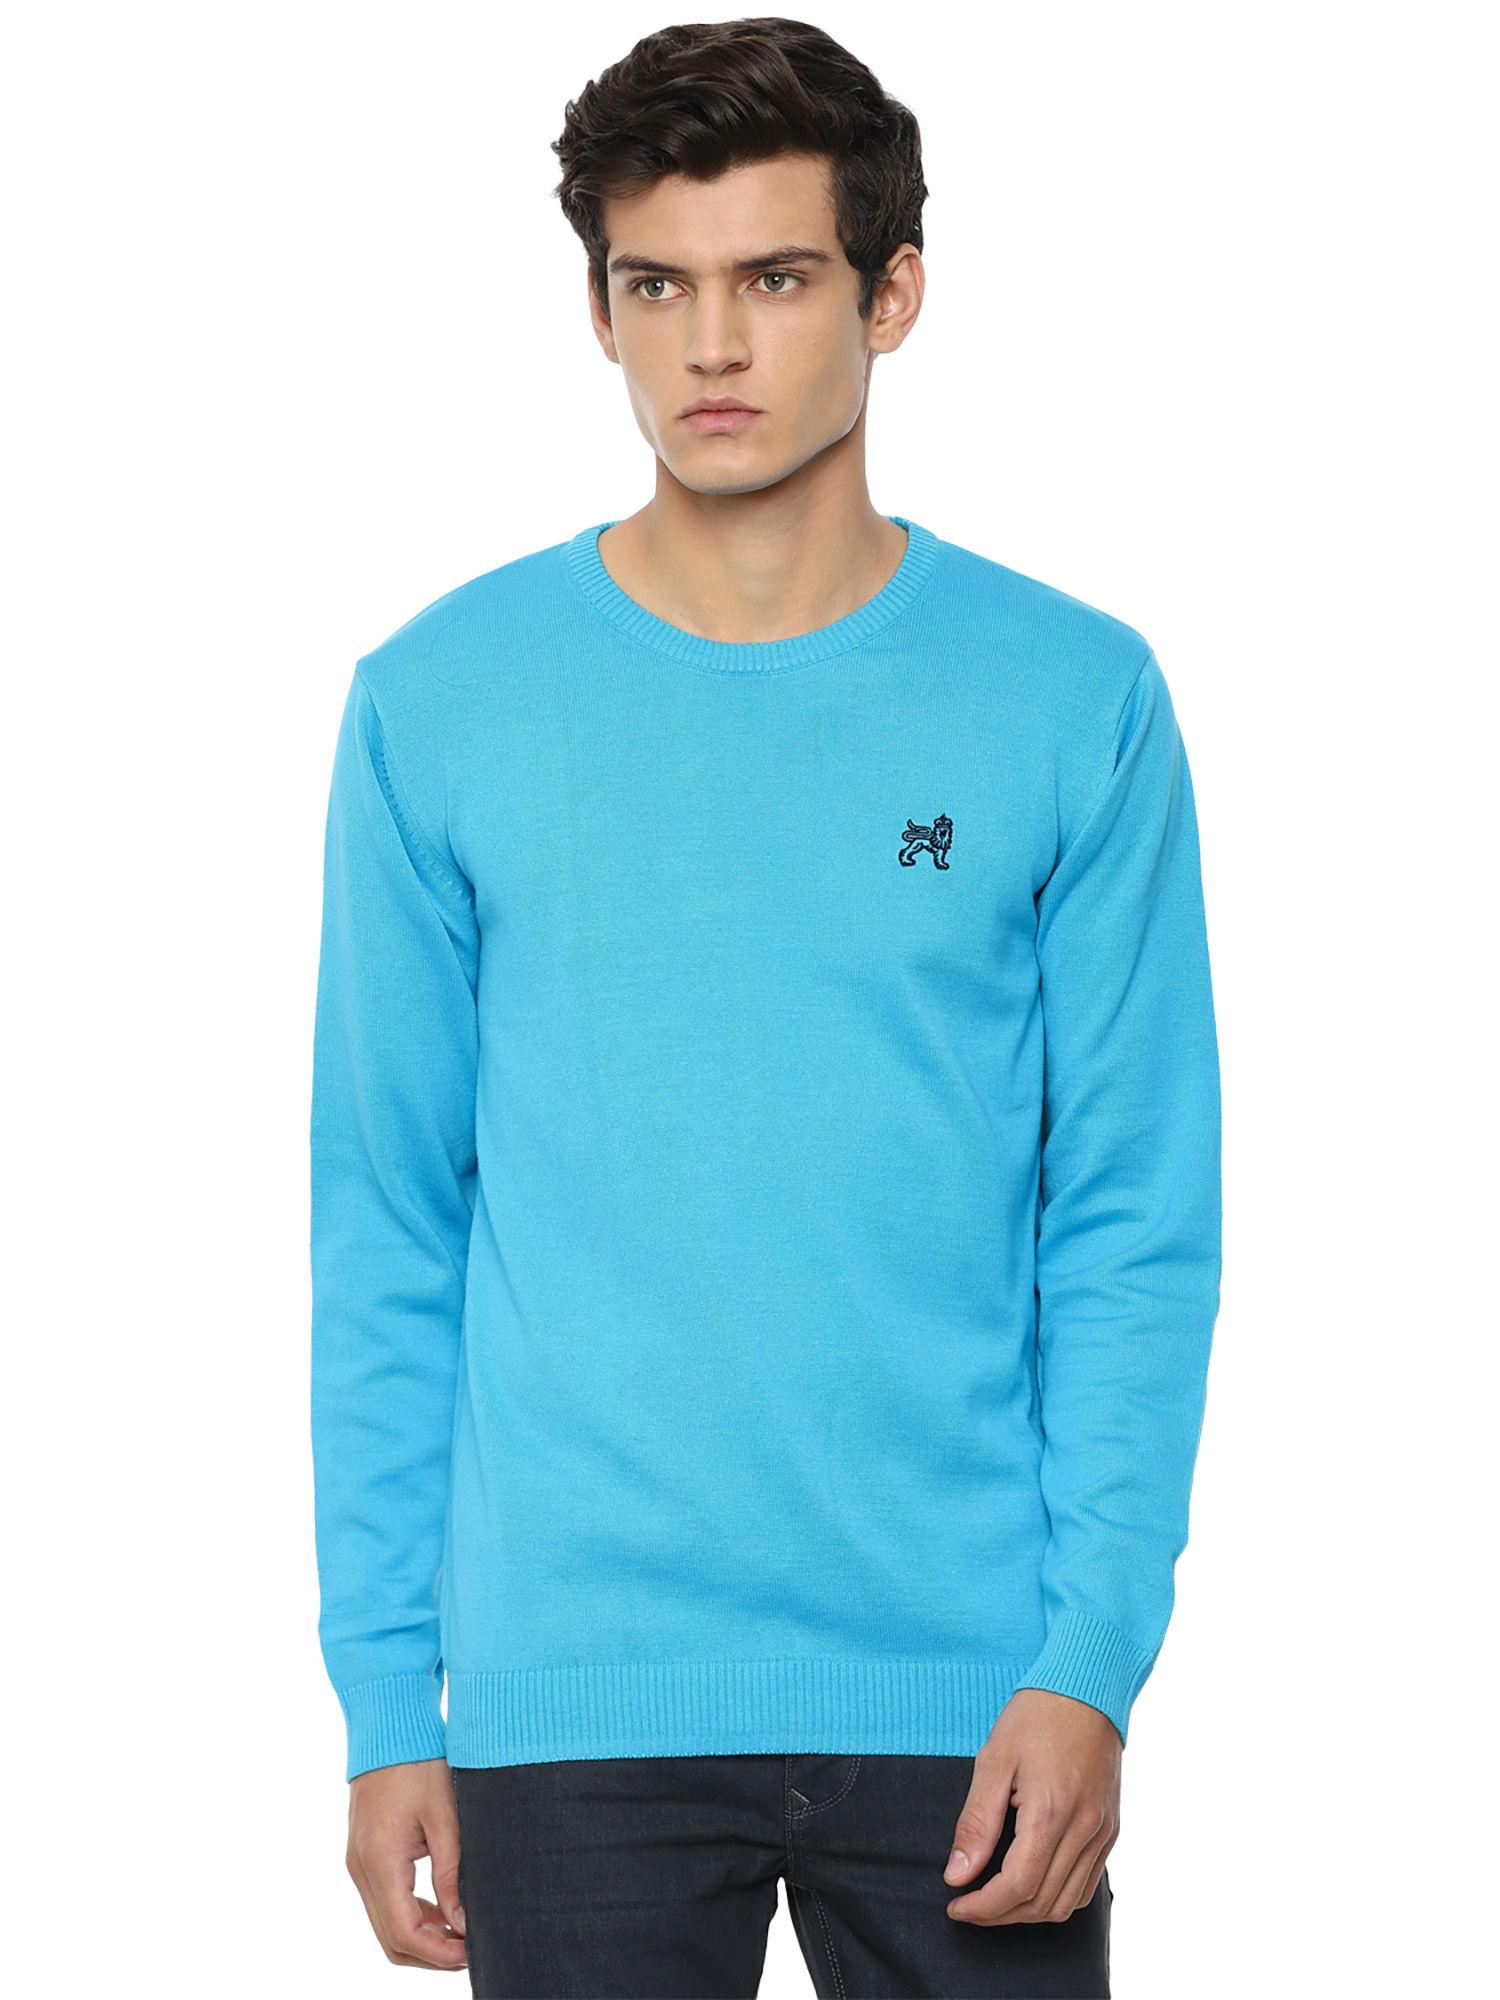 blue-sweater